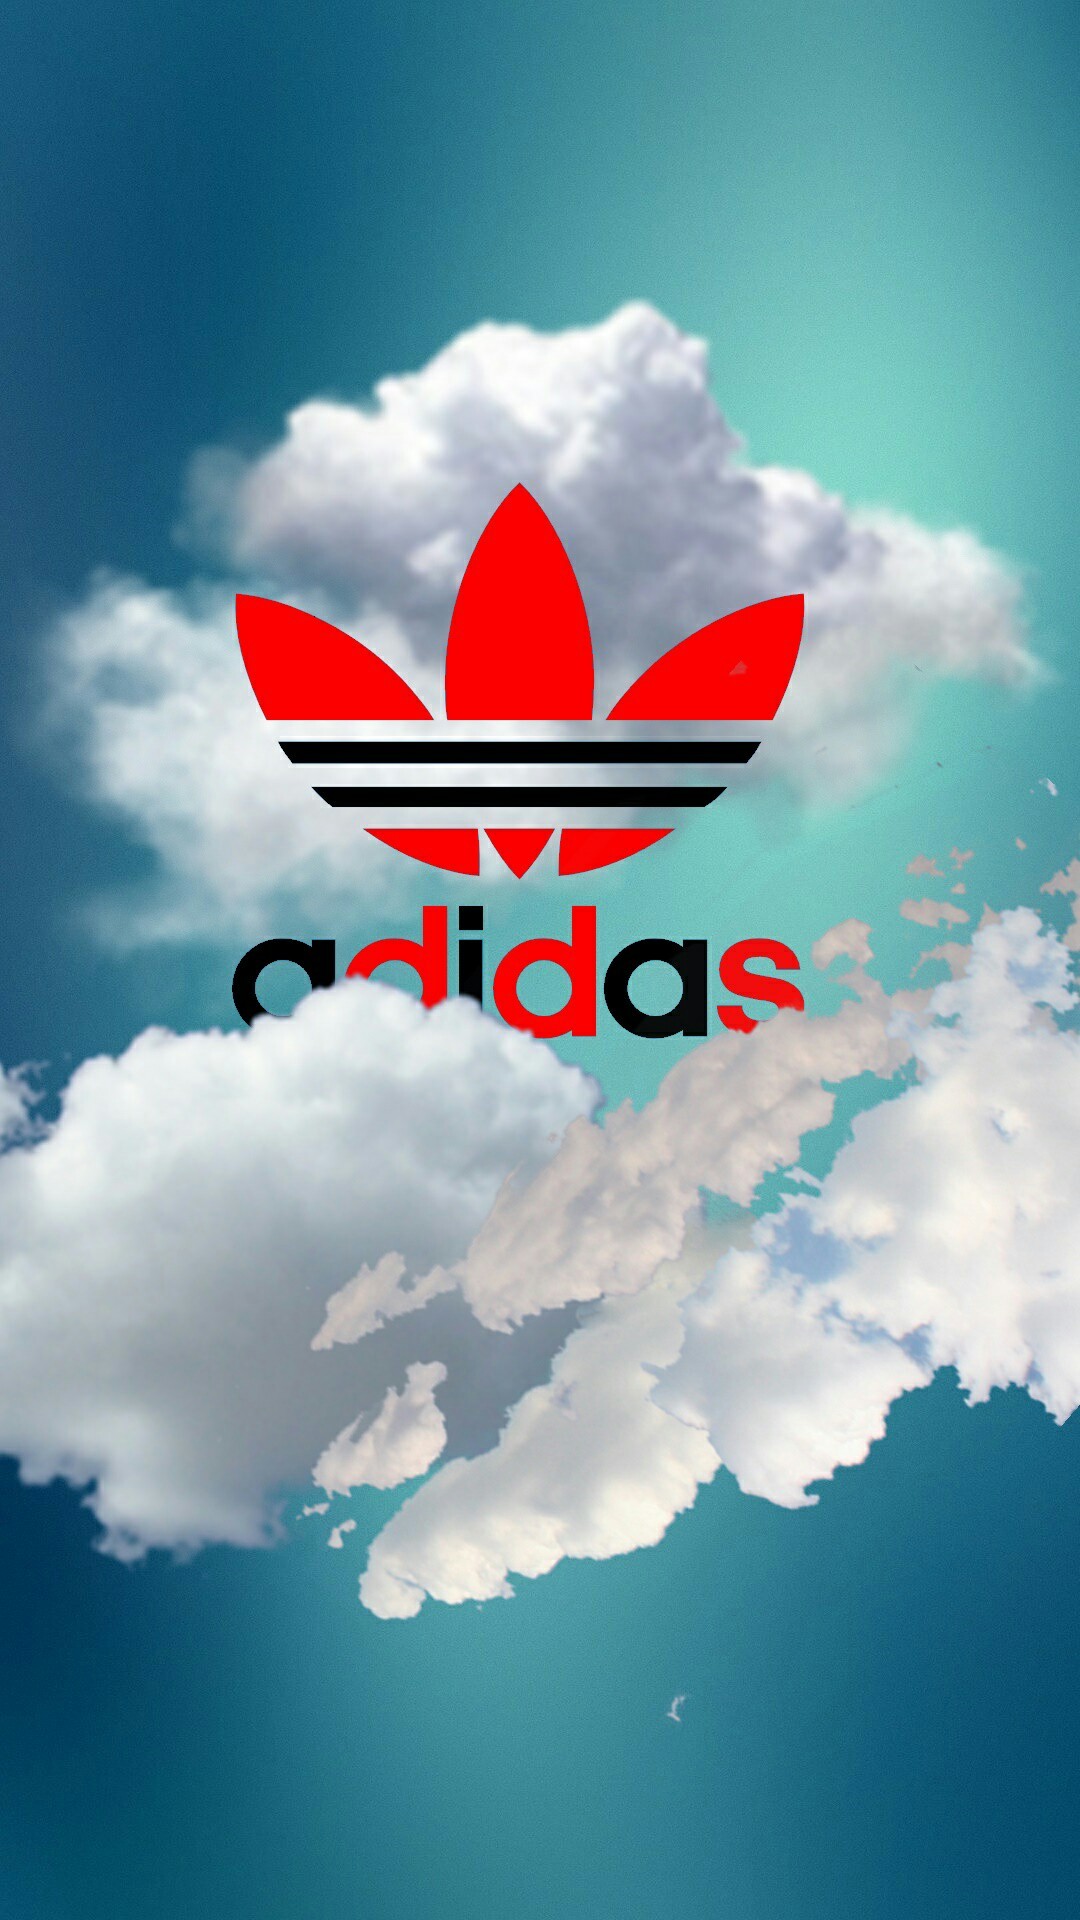 Adidas iPhone Wallpaper Image